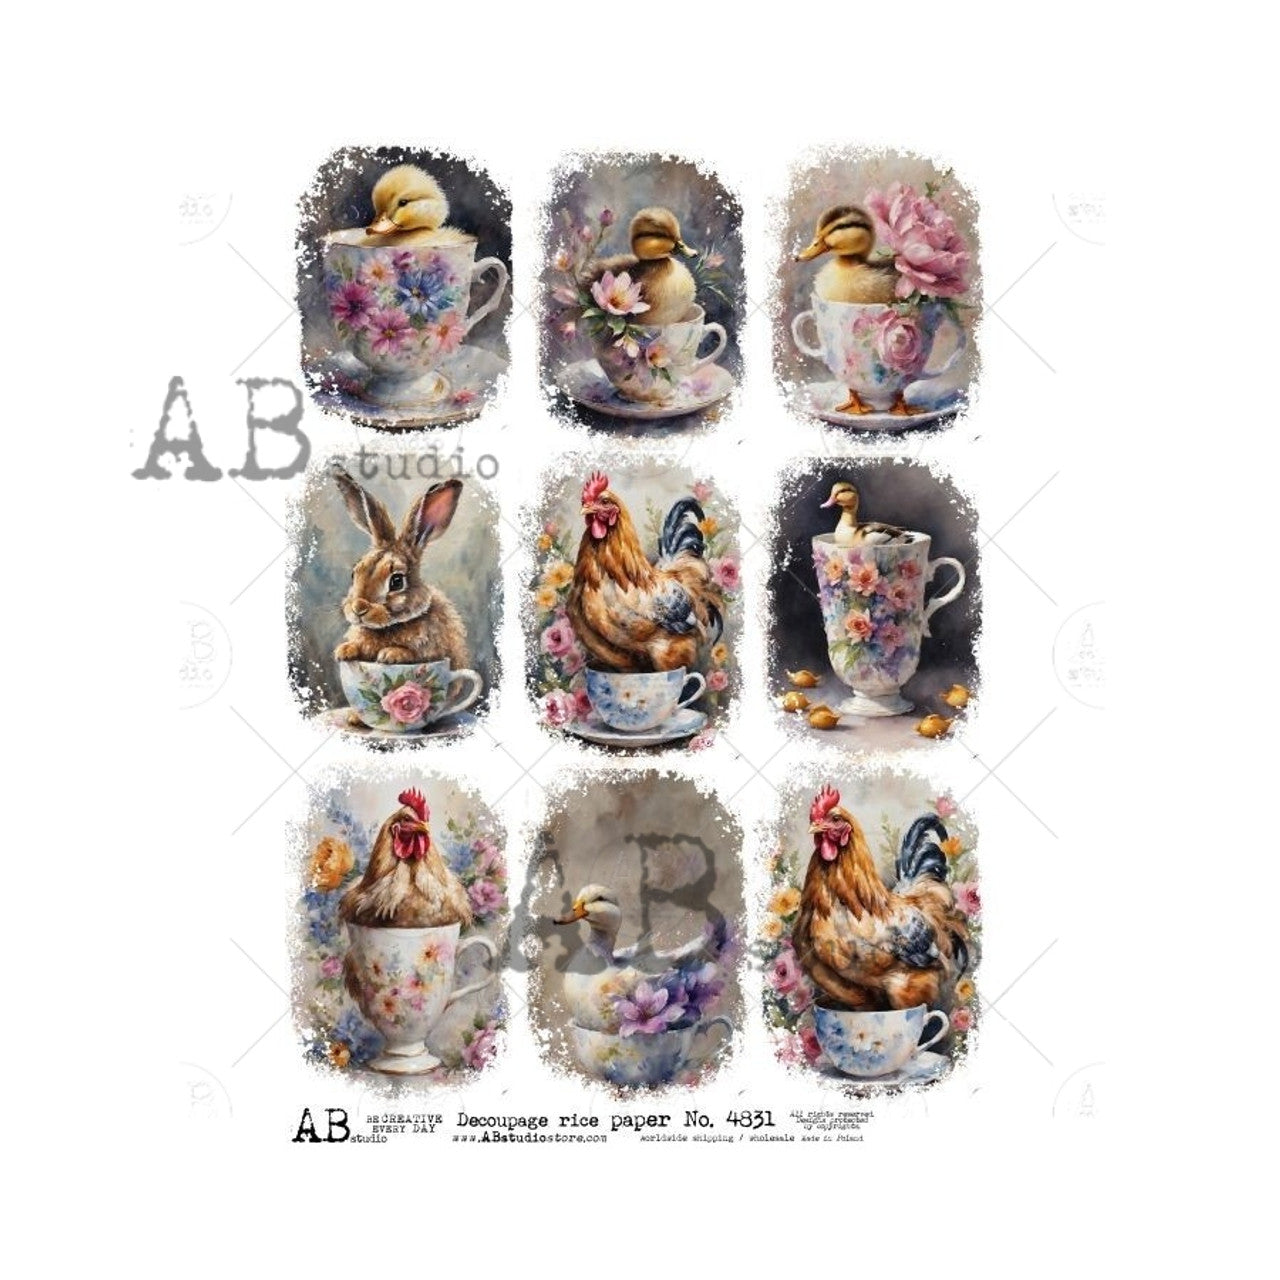 Animals in Teacups (#4831) Rice Paper- AB Studios  Decoupage Queen